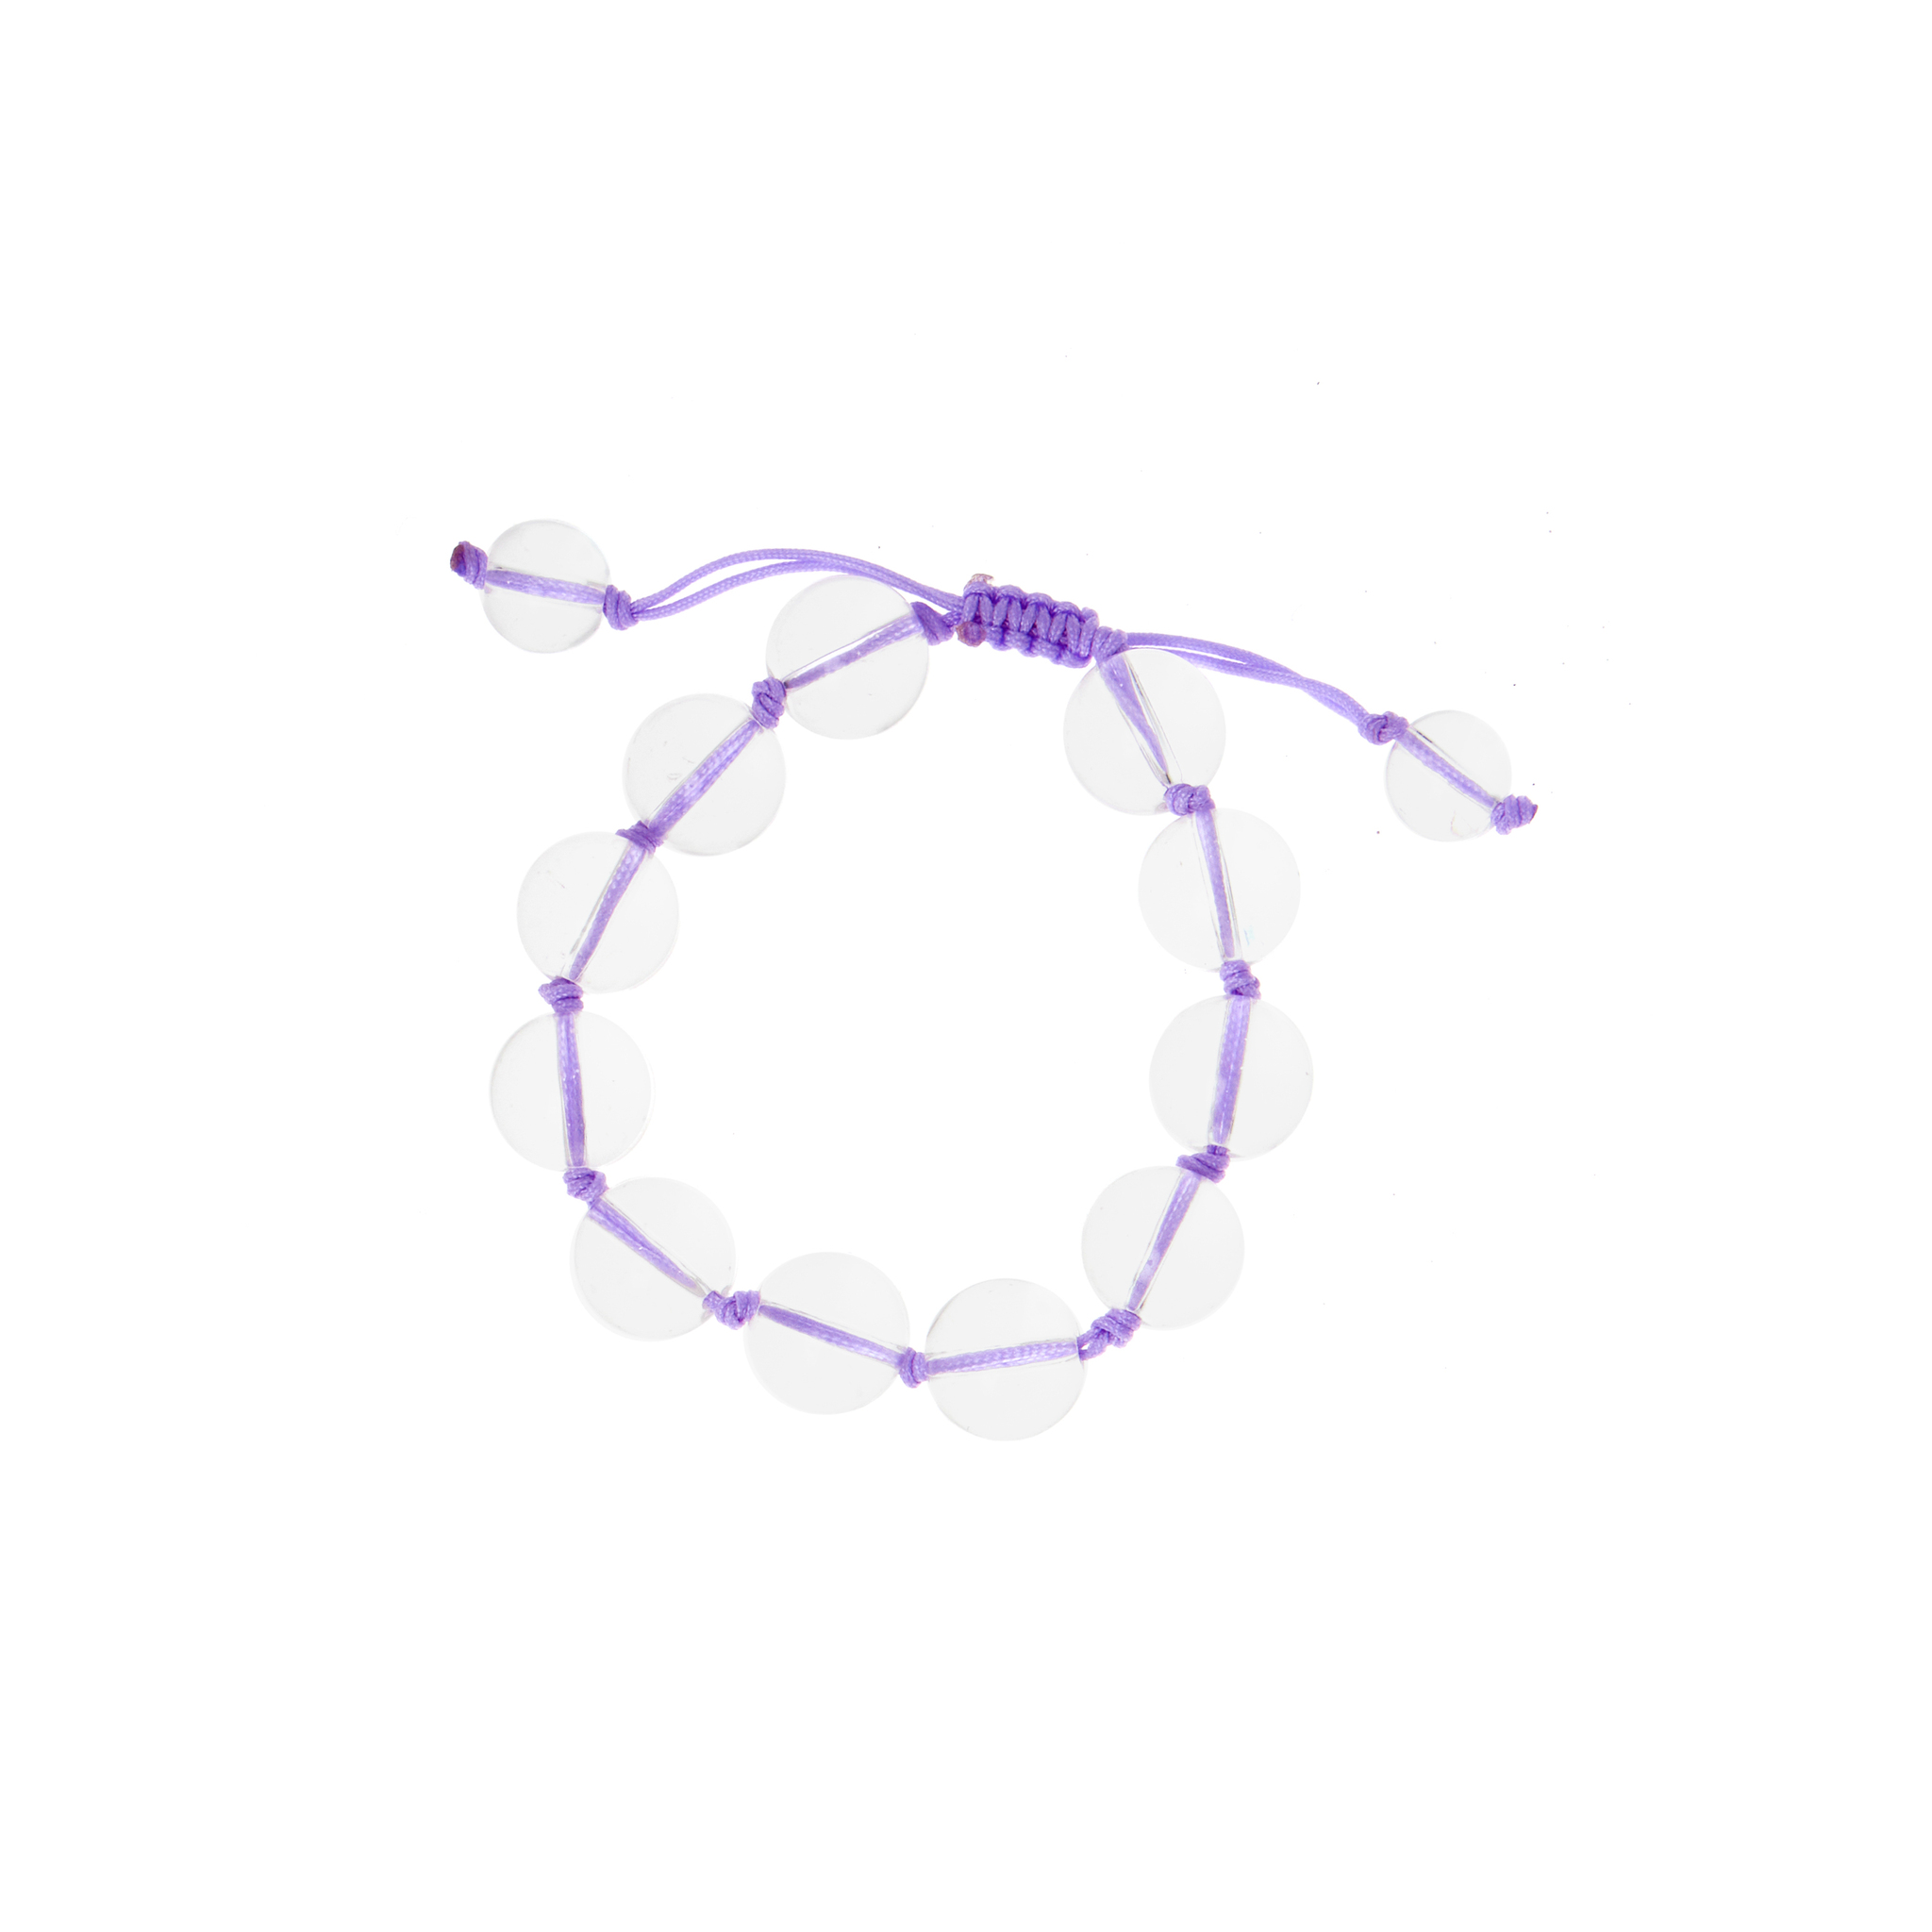 HOLLY JUNE Браслет Crystal Clear Bracelet – Violet holly june браслет cloudy sky bracelet